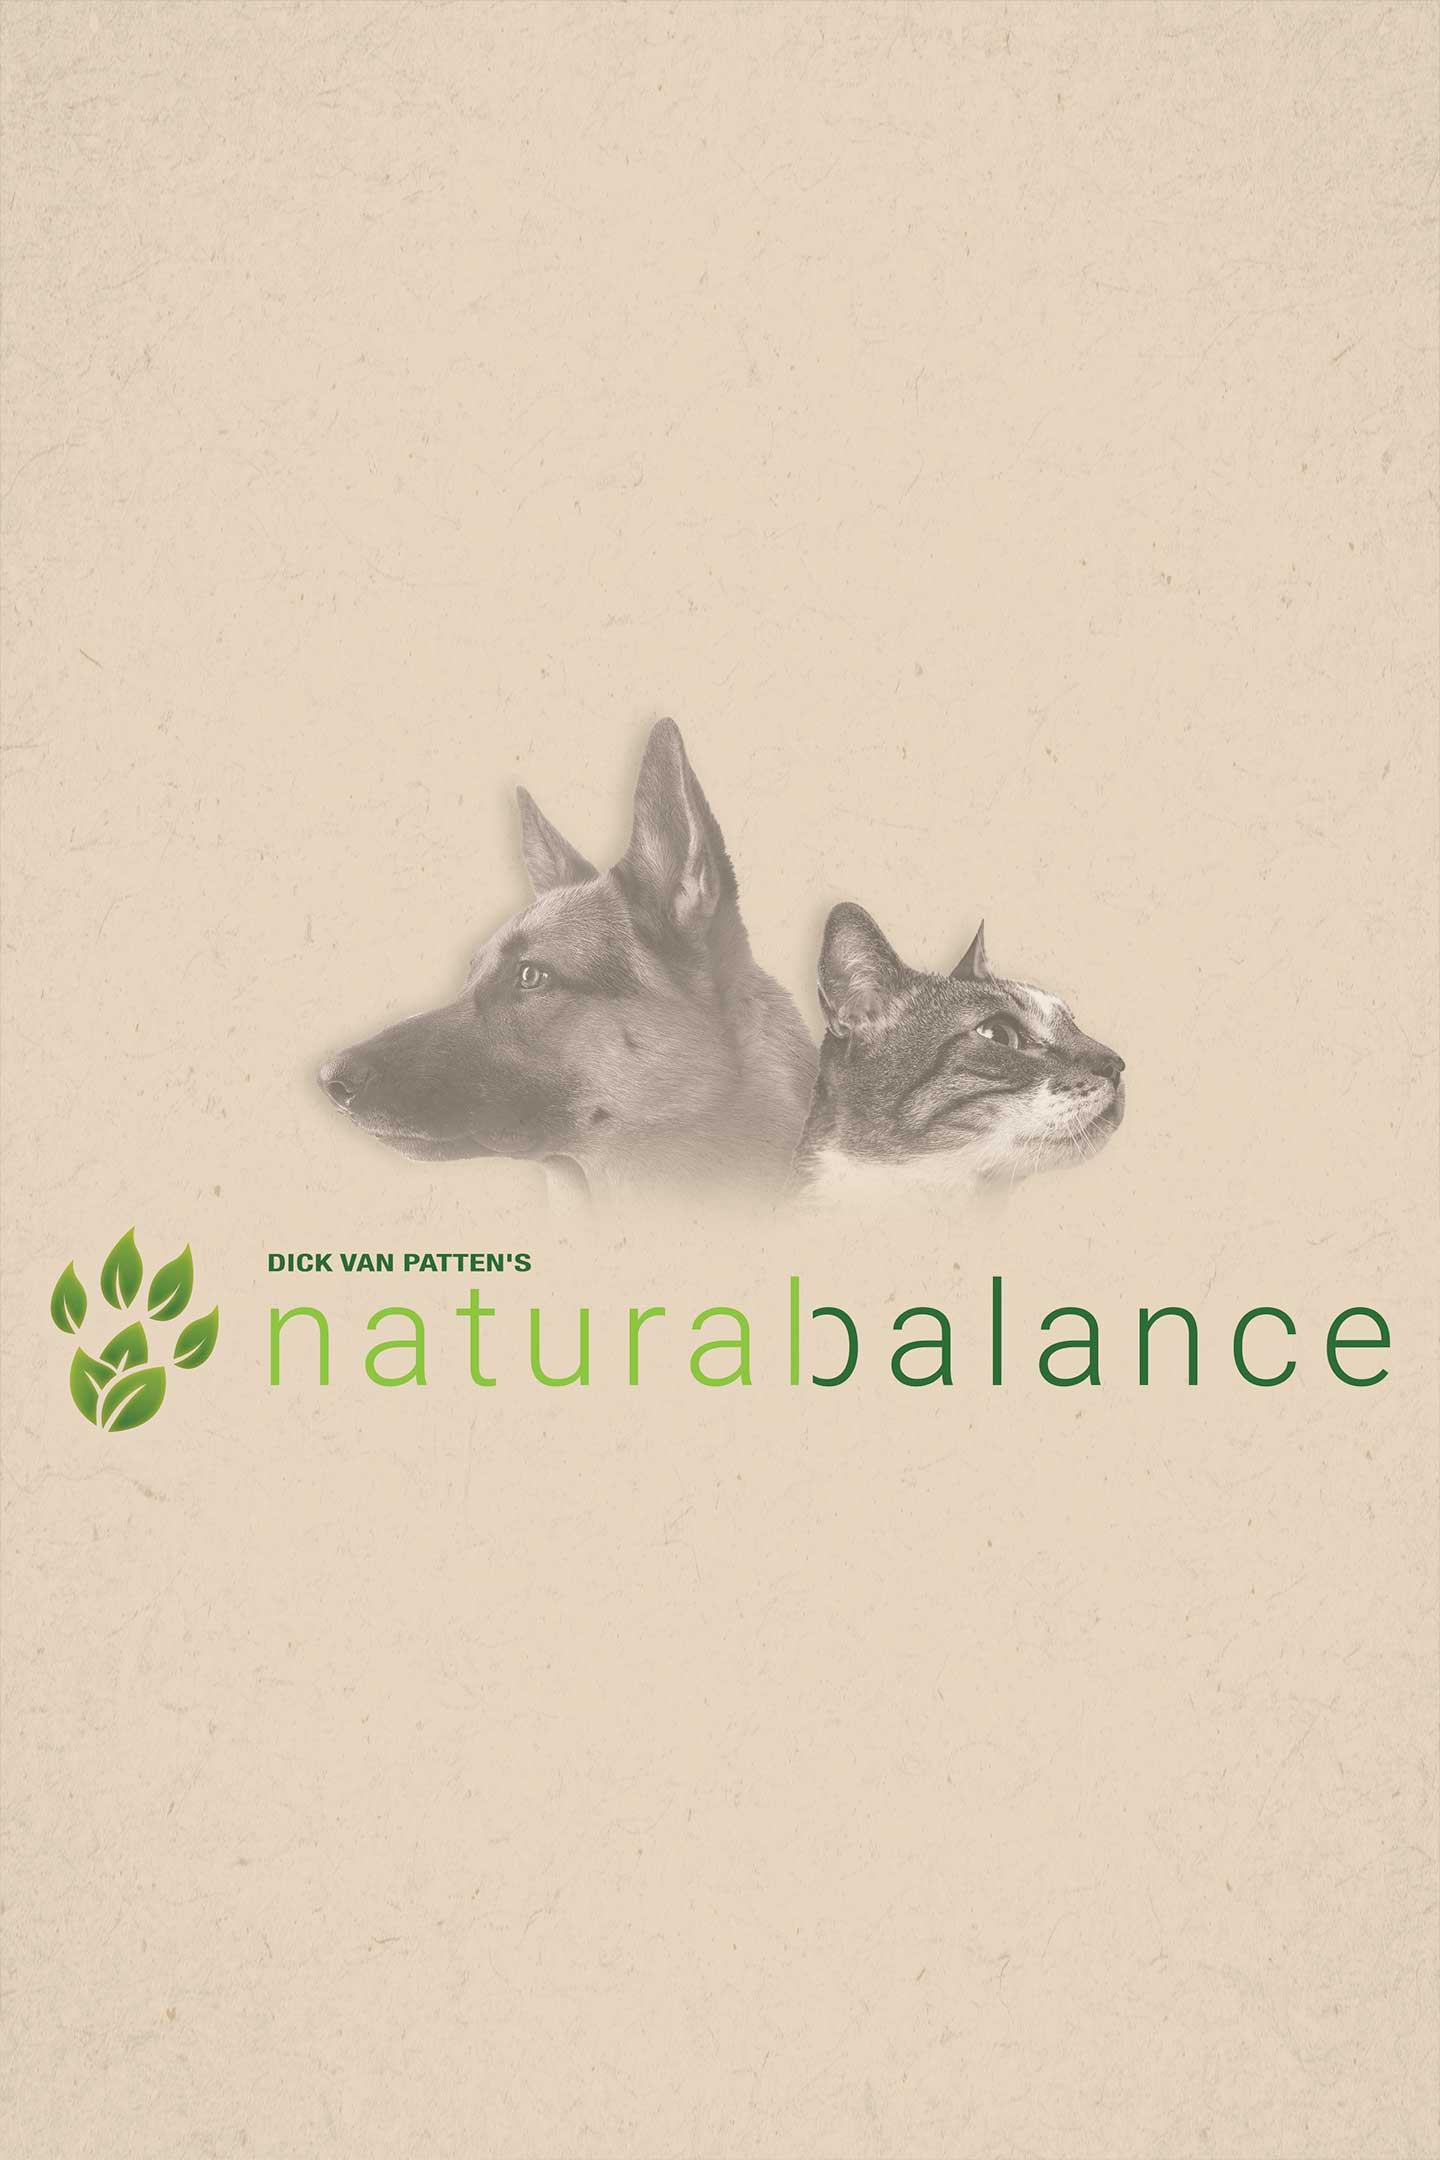 Natural Balance Re-Branding Project